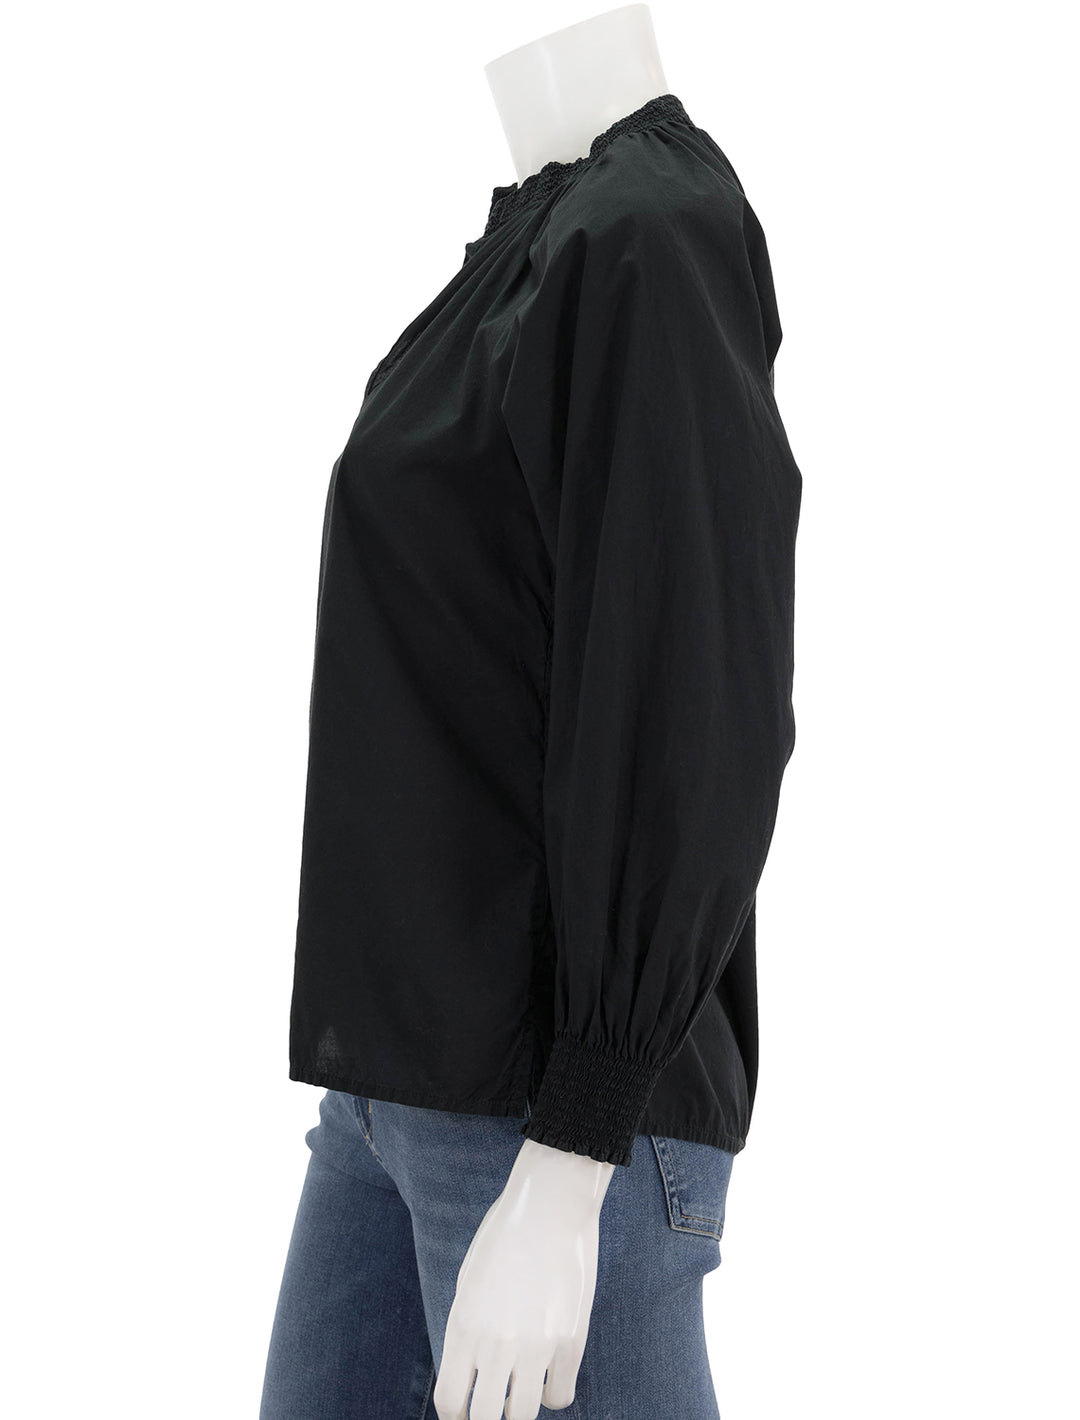 Side view of Nation LTD's estelle peasant blouse in black.